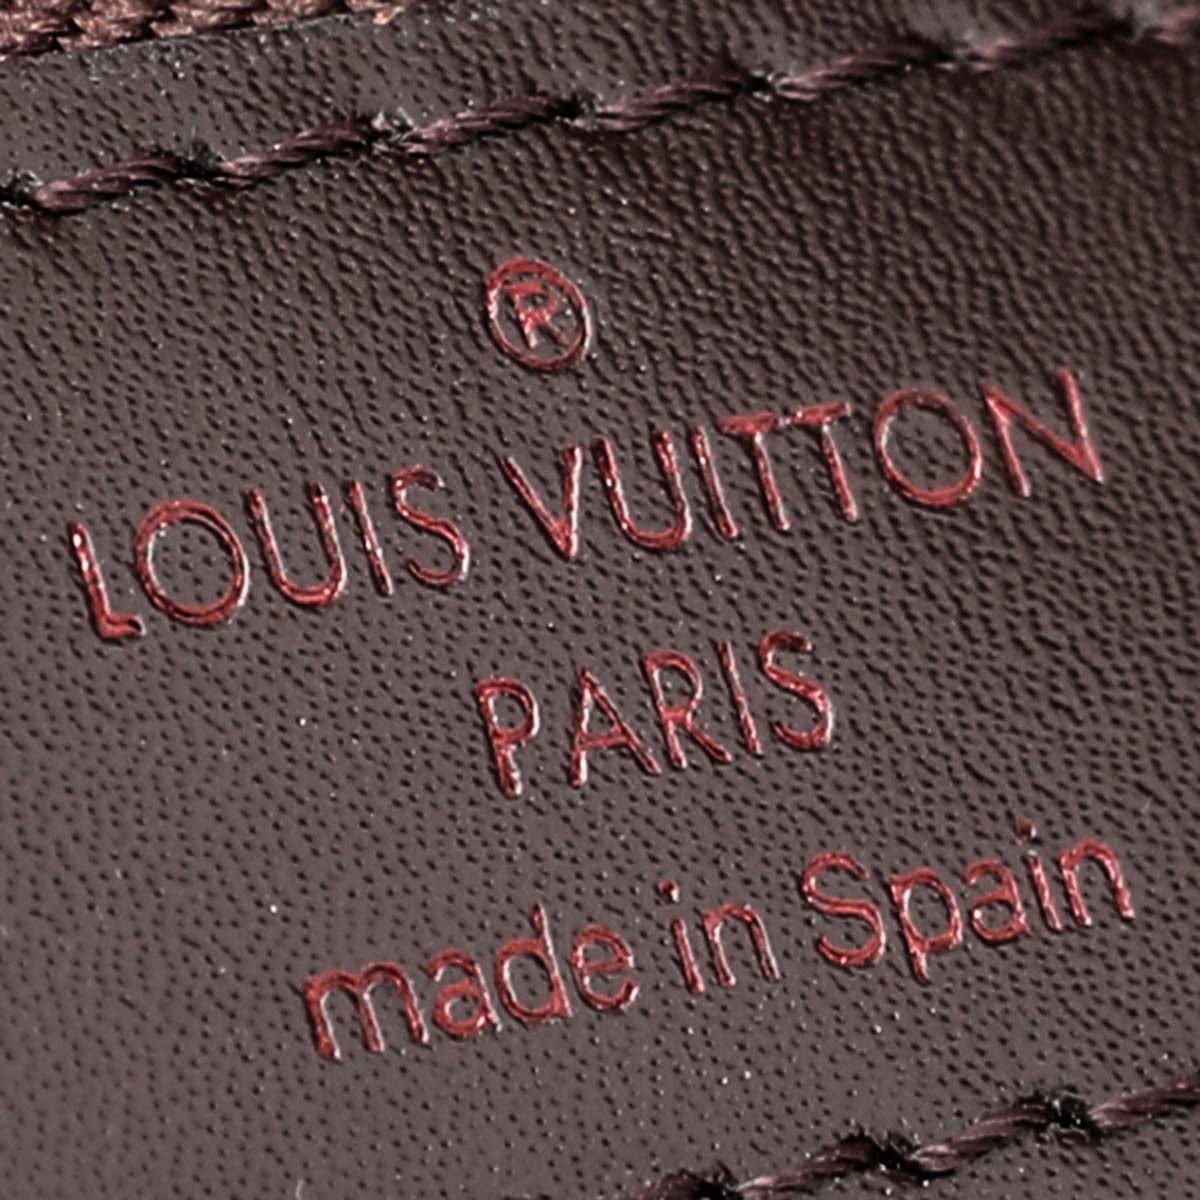 Louis Vuitton Ebene Neverfull Bag